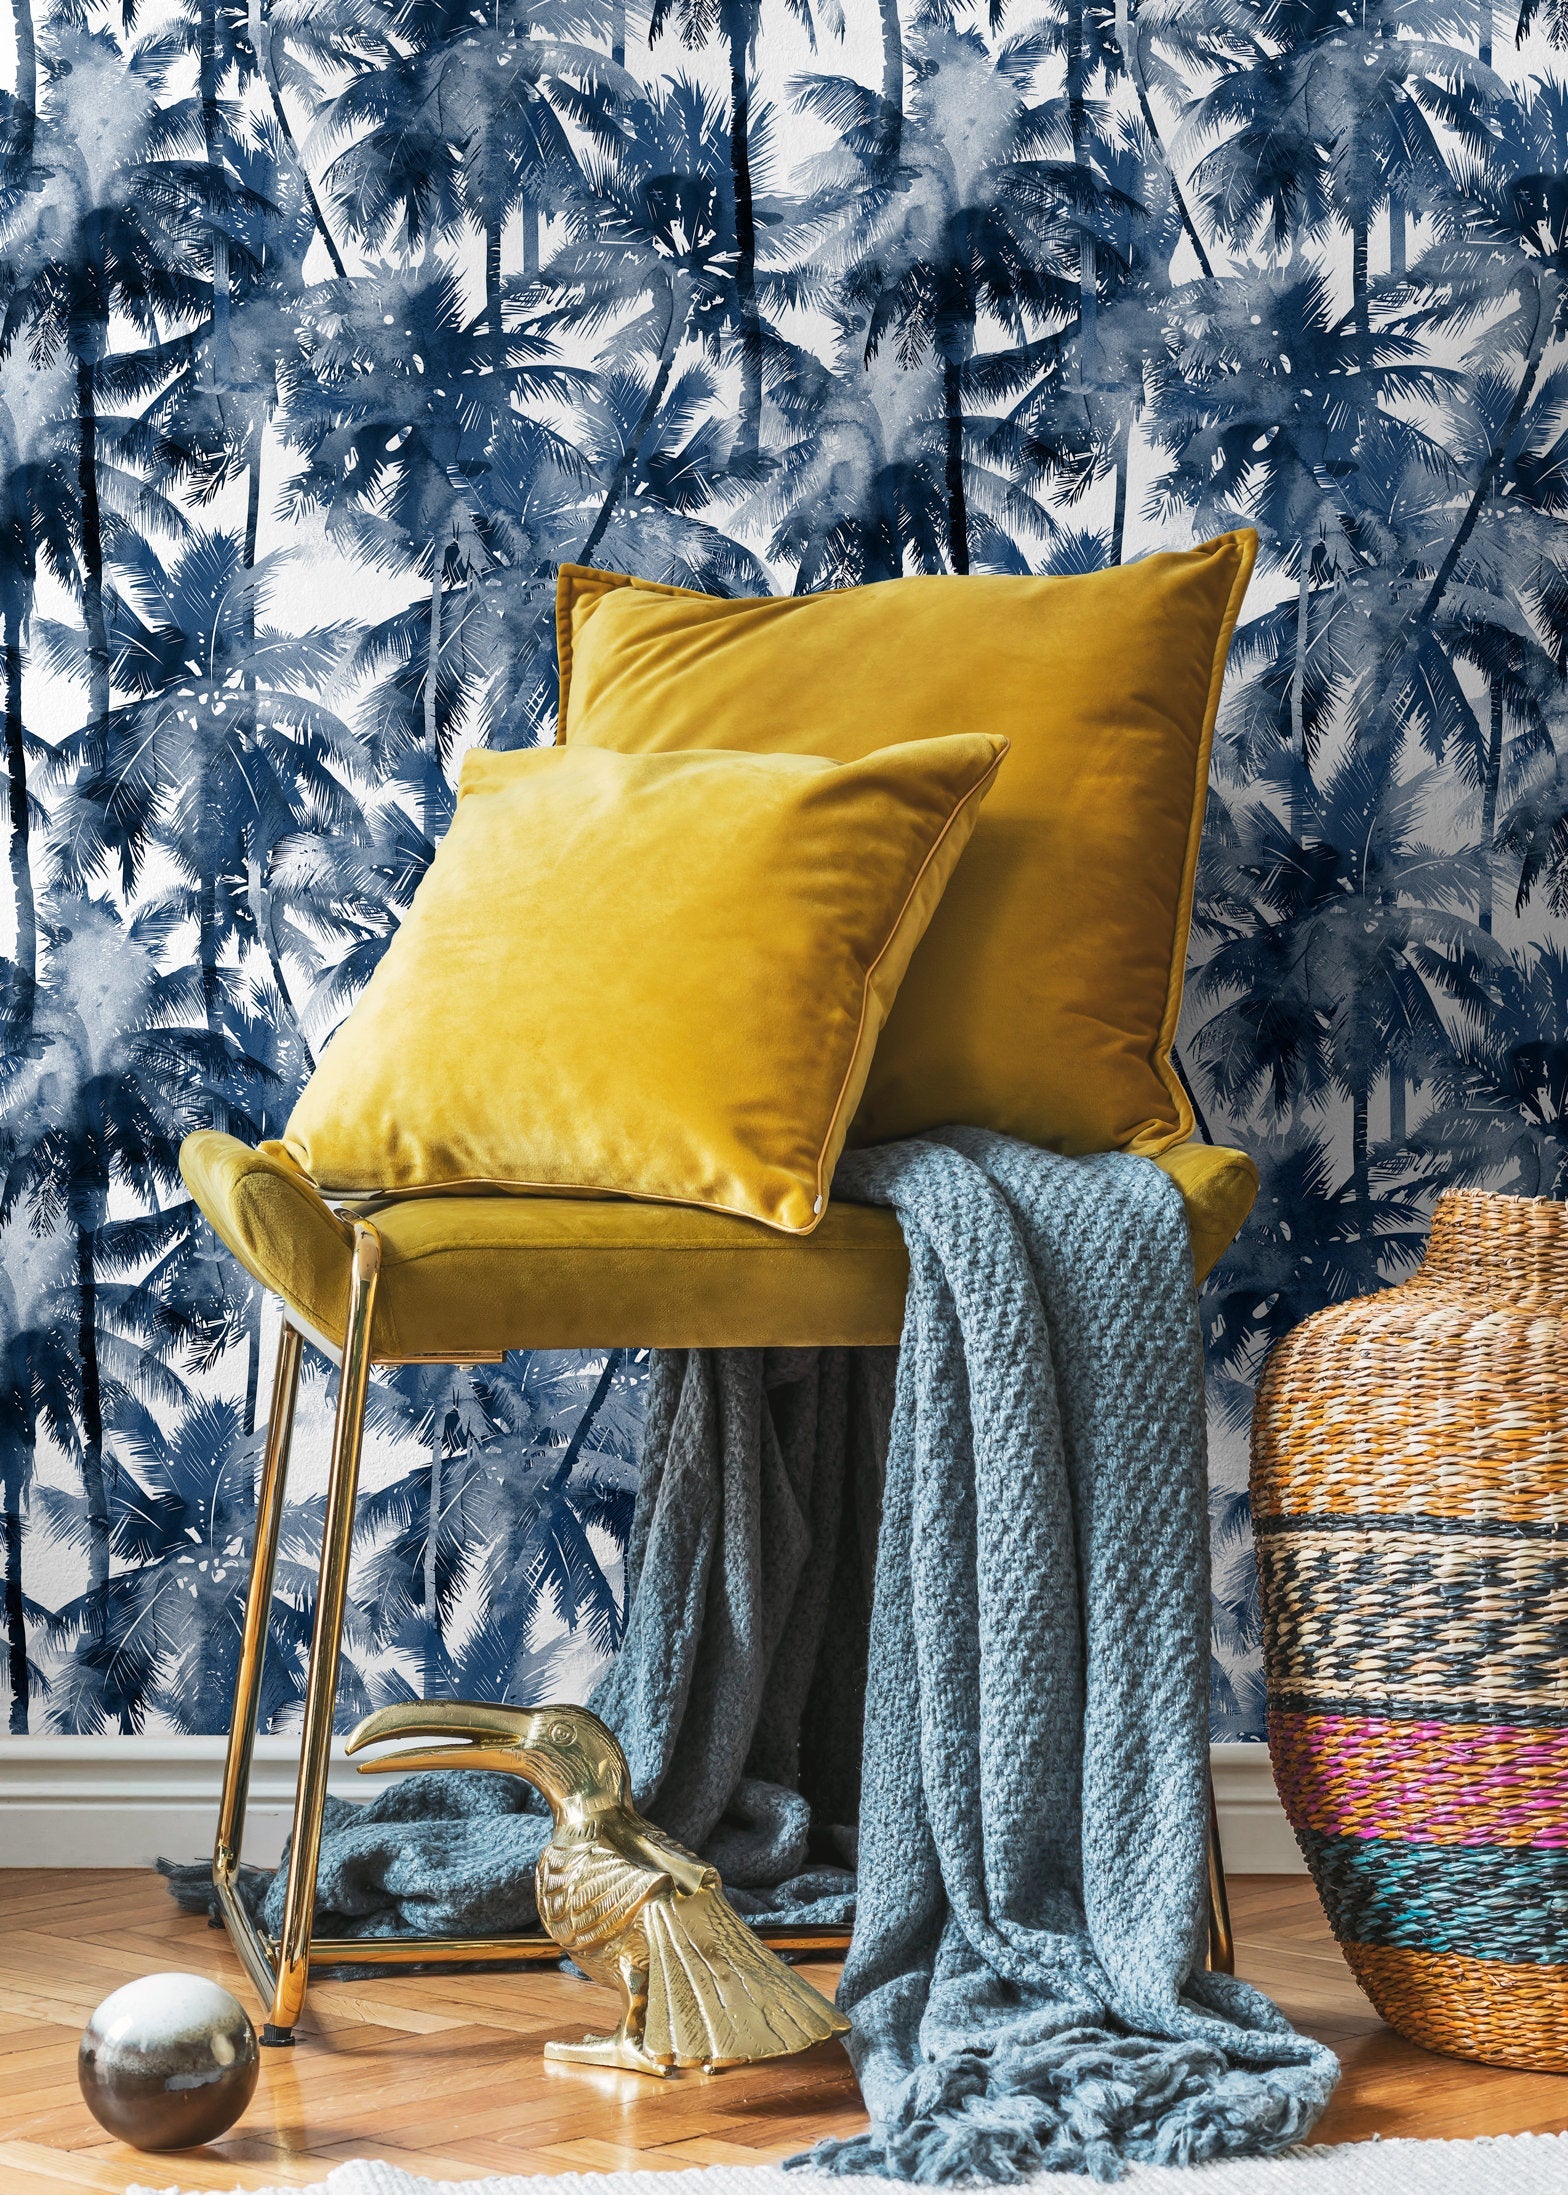 Blue Palm Trees Wallpaper, Blue Wallpaper, Peel and Stick Fabric Wallpaper, Custom Design Wall - B133